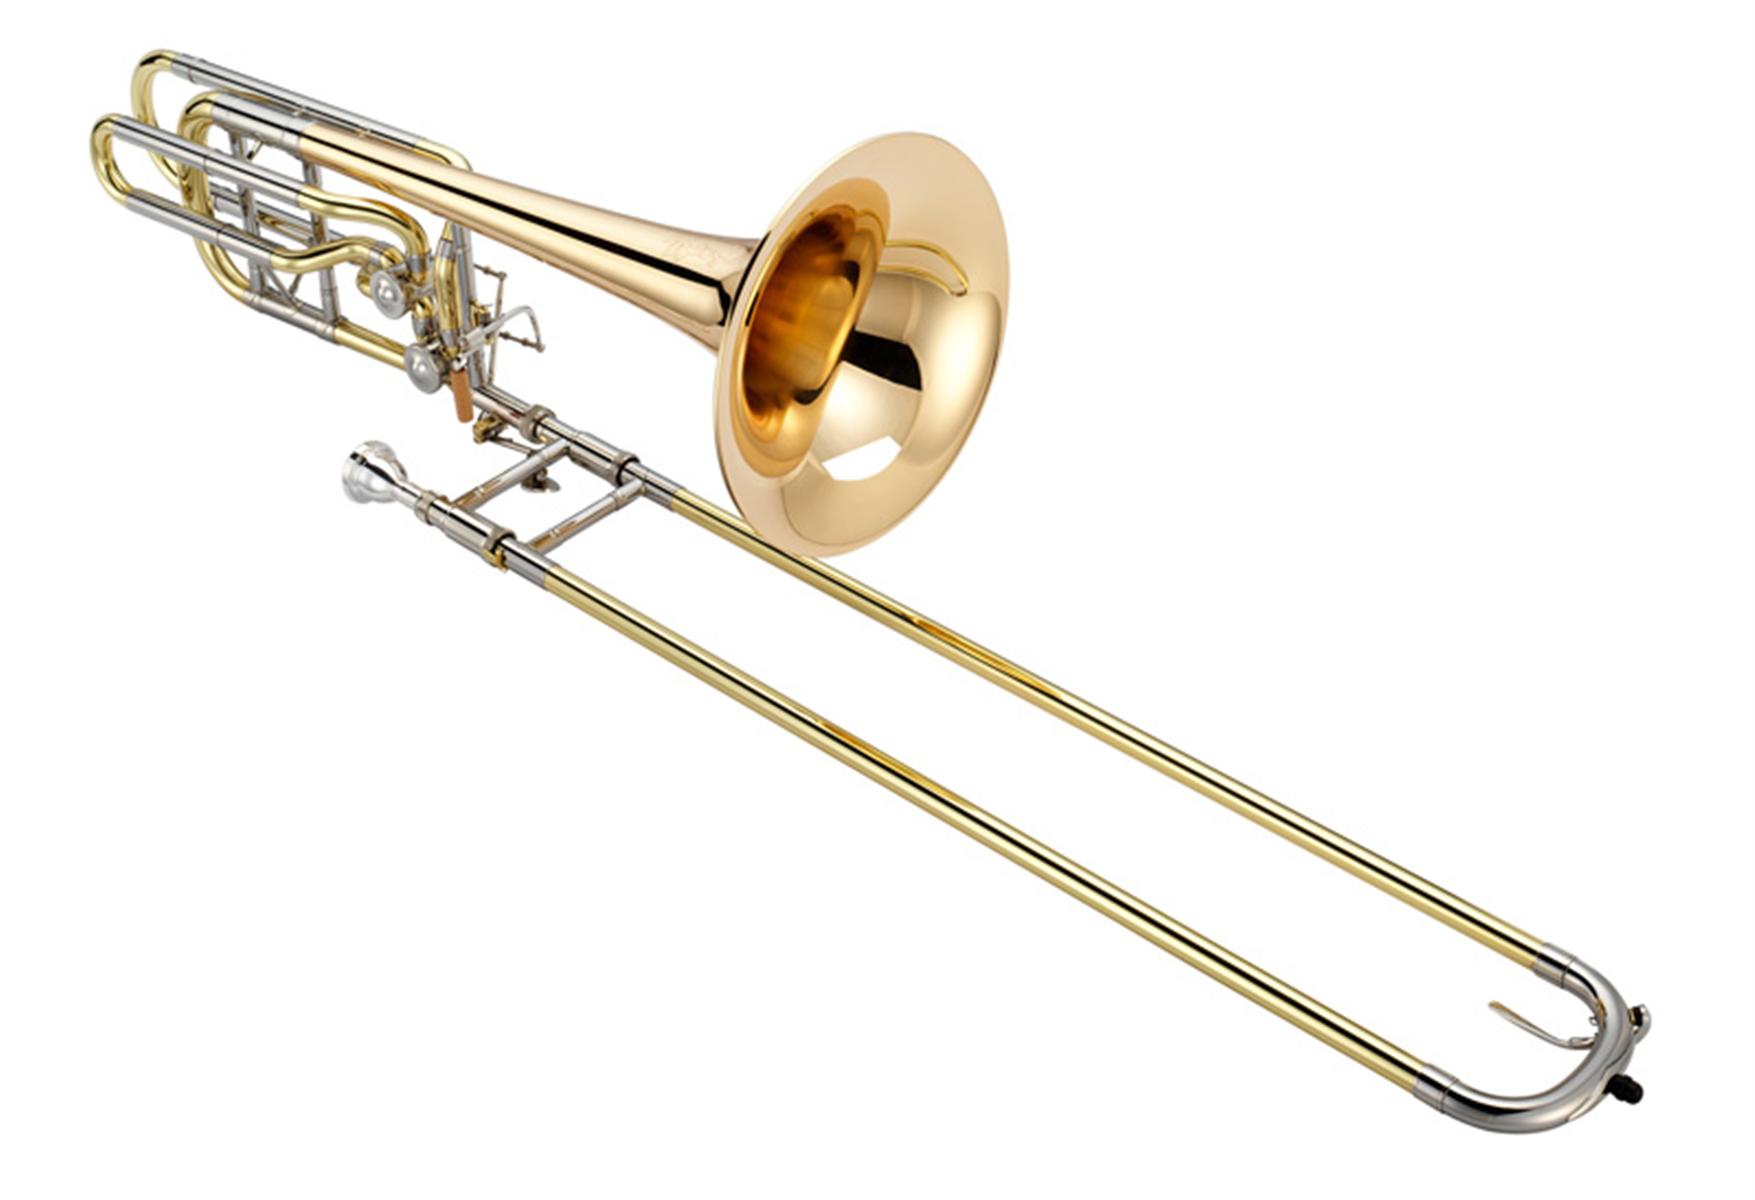 Звук музыкальной трубы. Тромбон музыкальный инструмент. Труба музыкальный инструмент тромбон. Инструмент тромбон тромбон. Трамболин музыкальный инструмент.